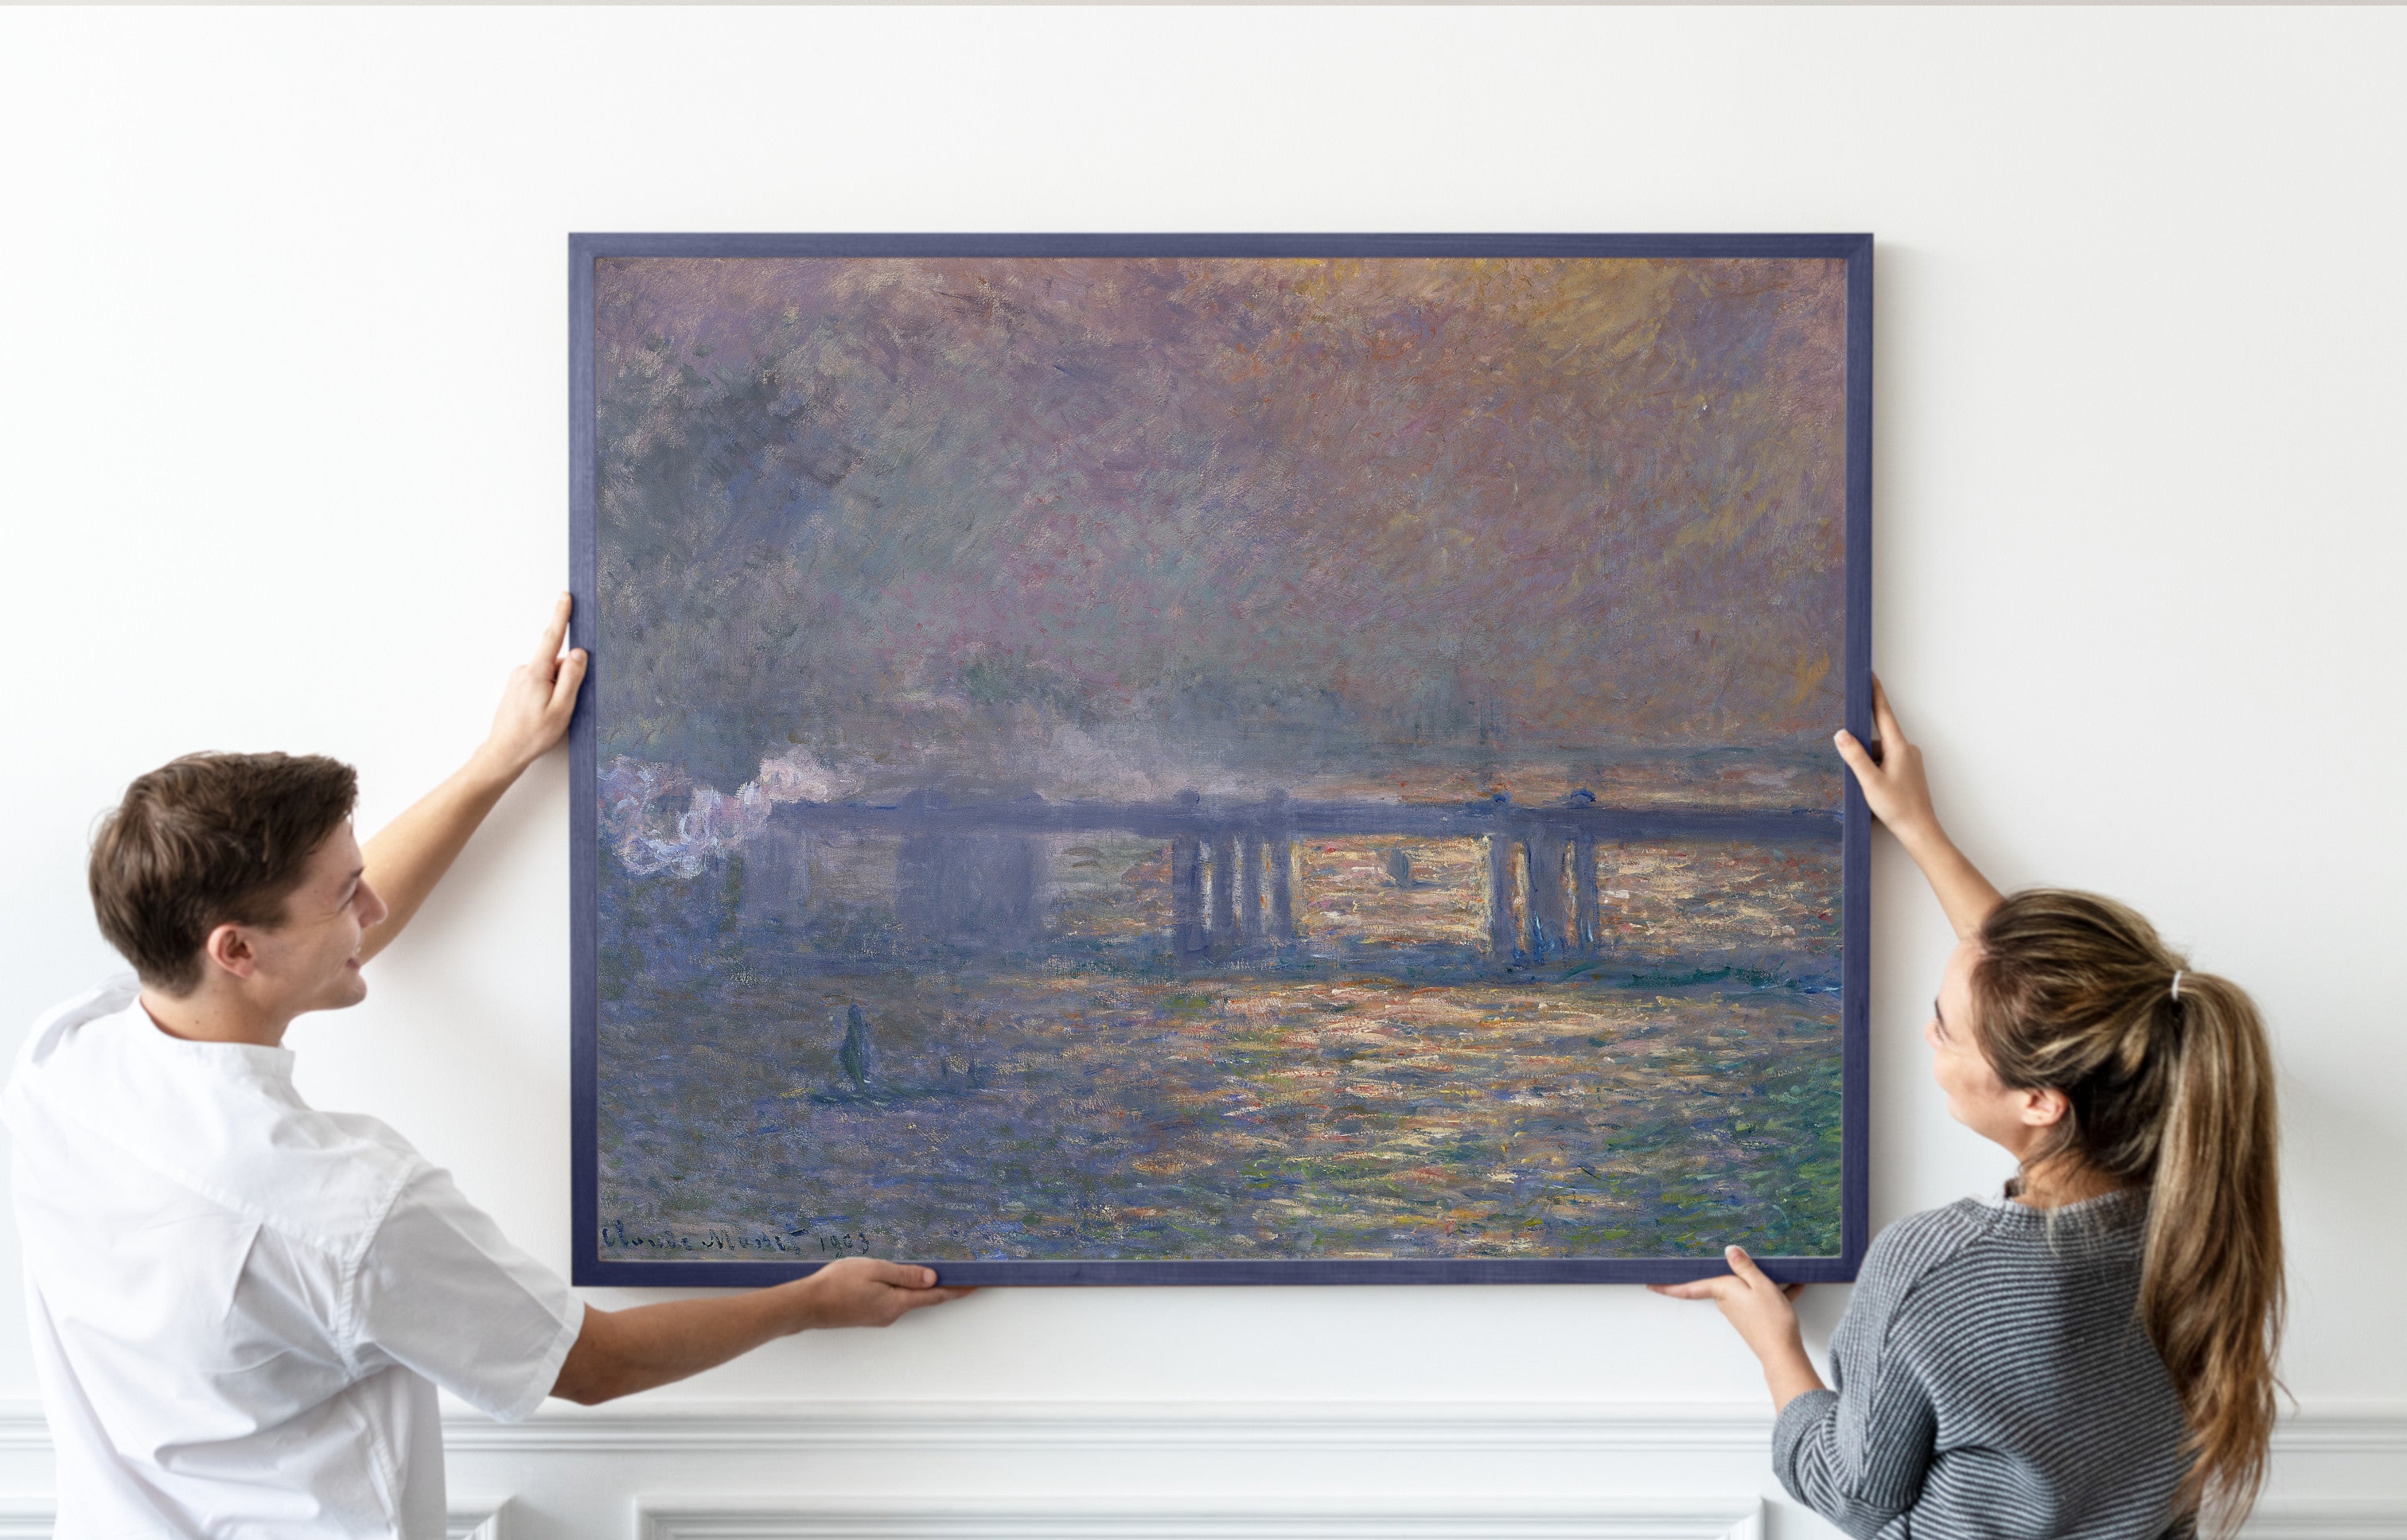 Claude Monet, Charing Cross Bridge, Canvas Reproduction